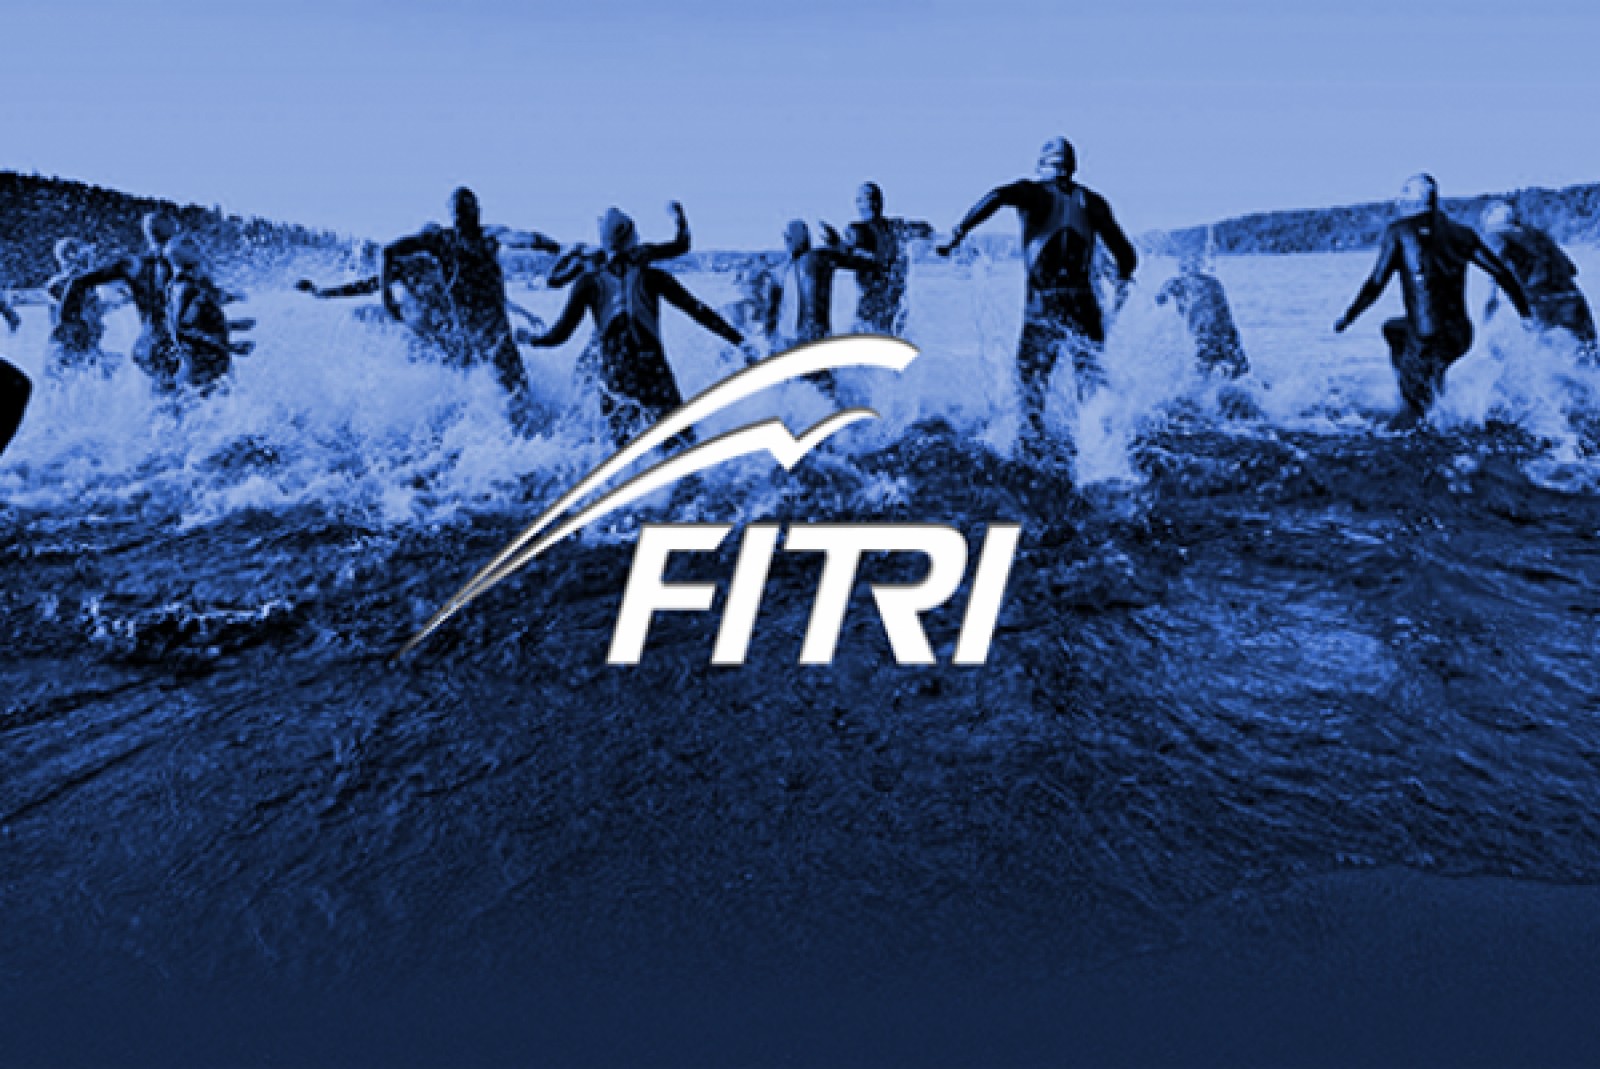 Logo FITRI